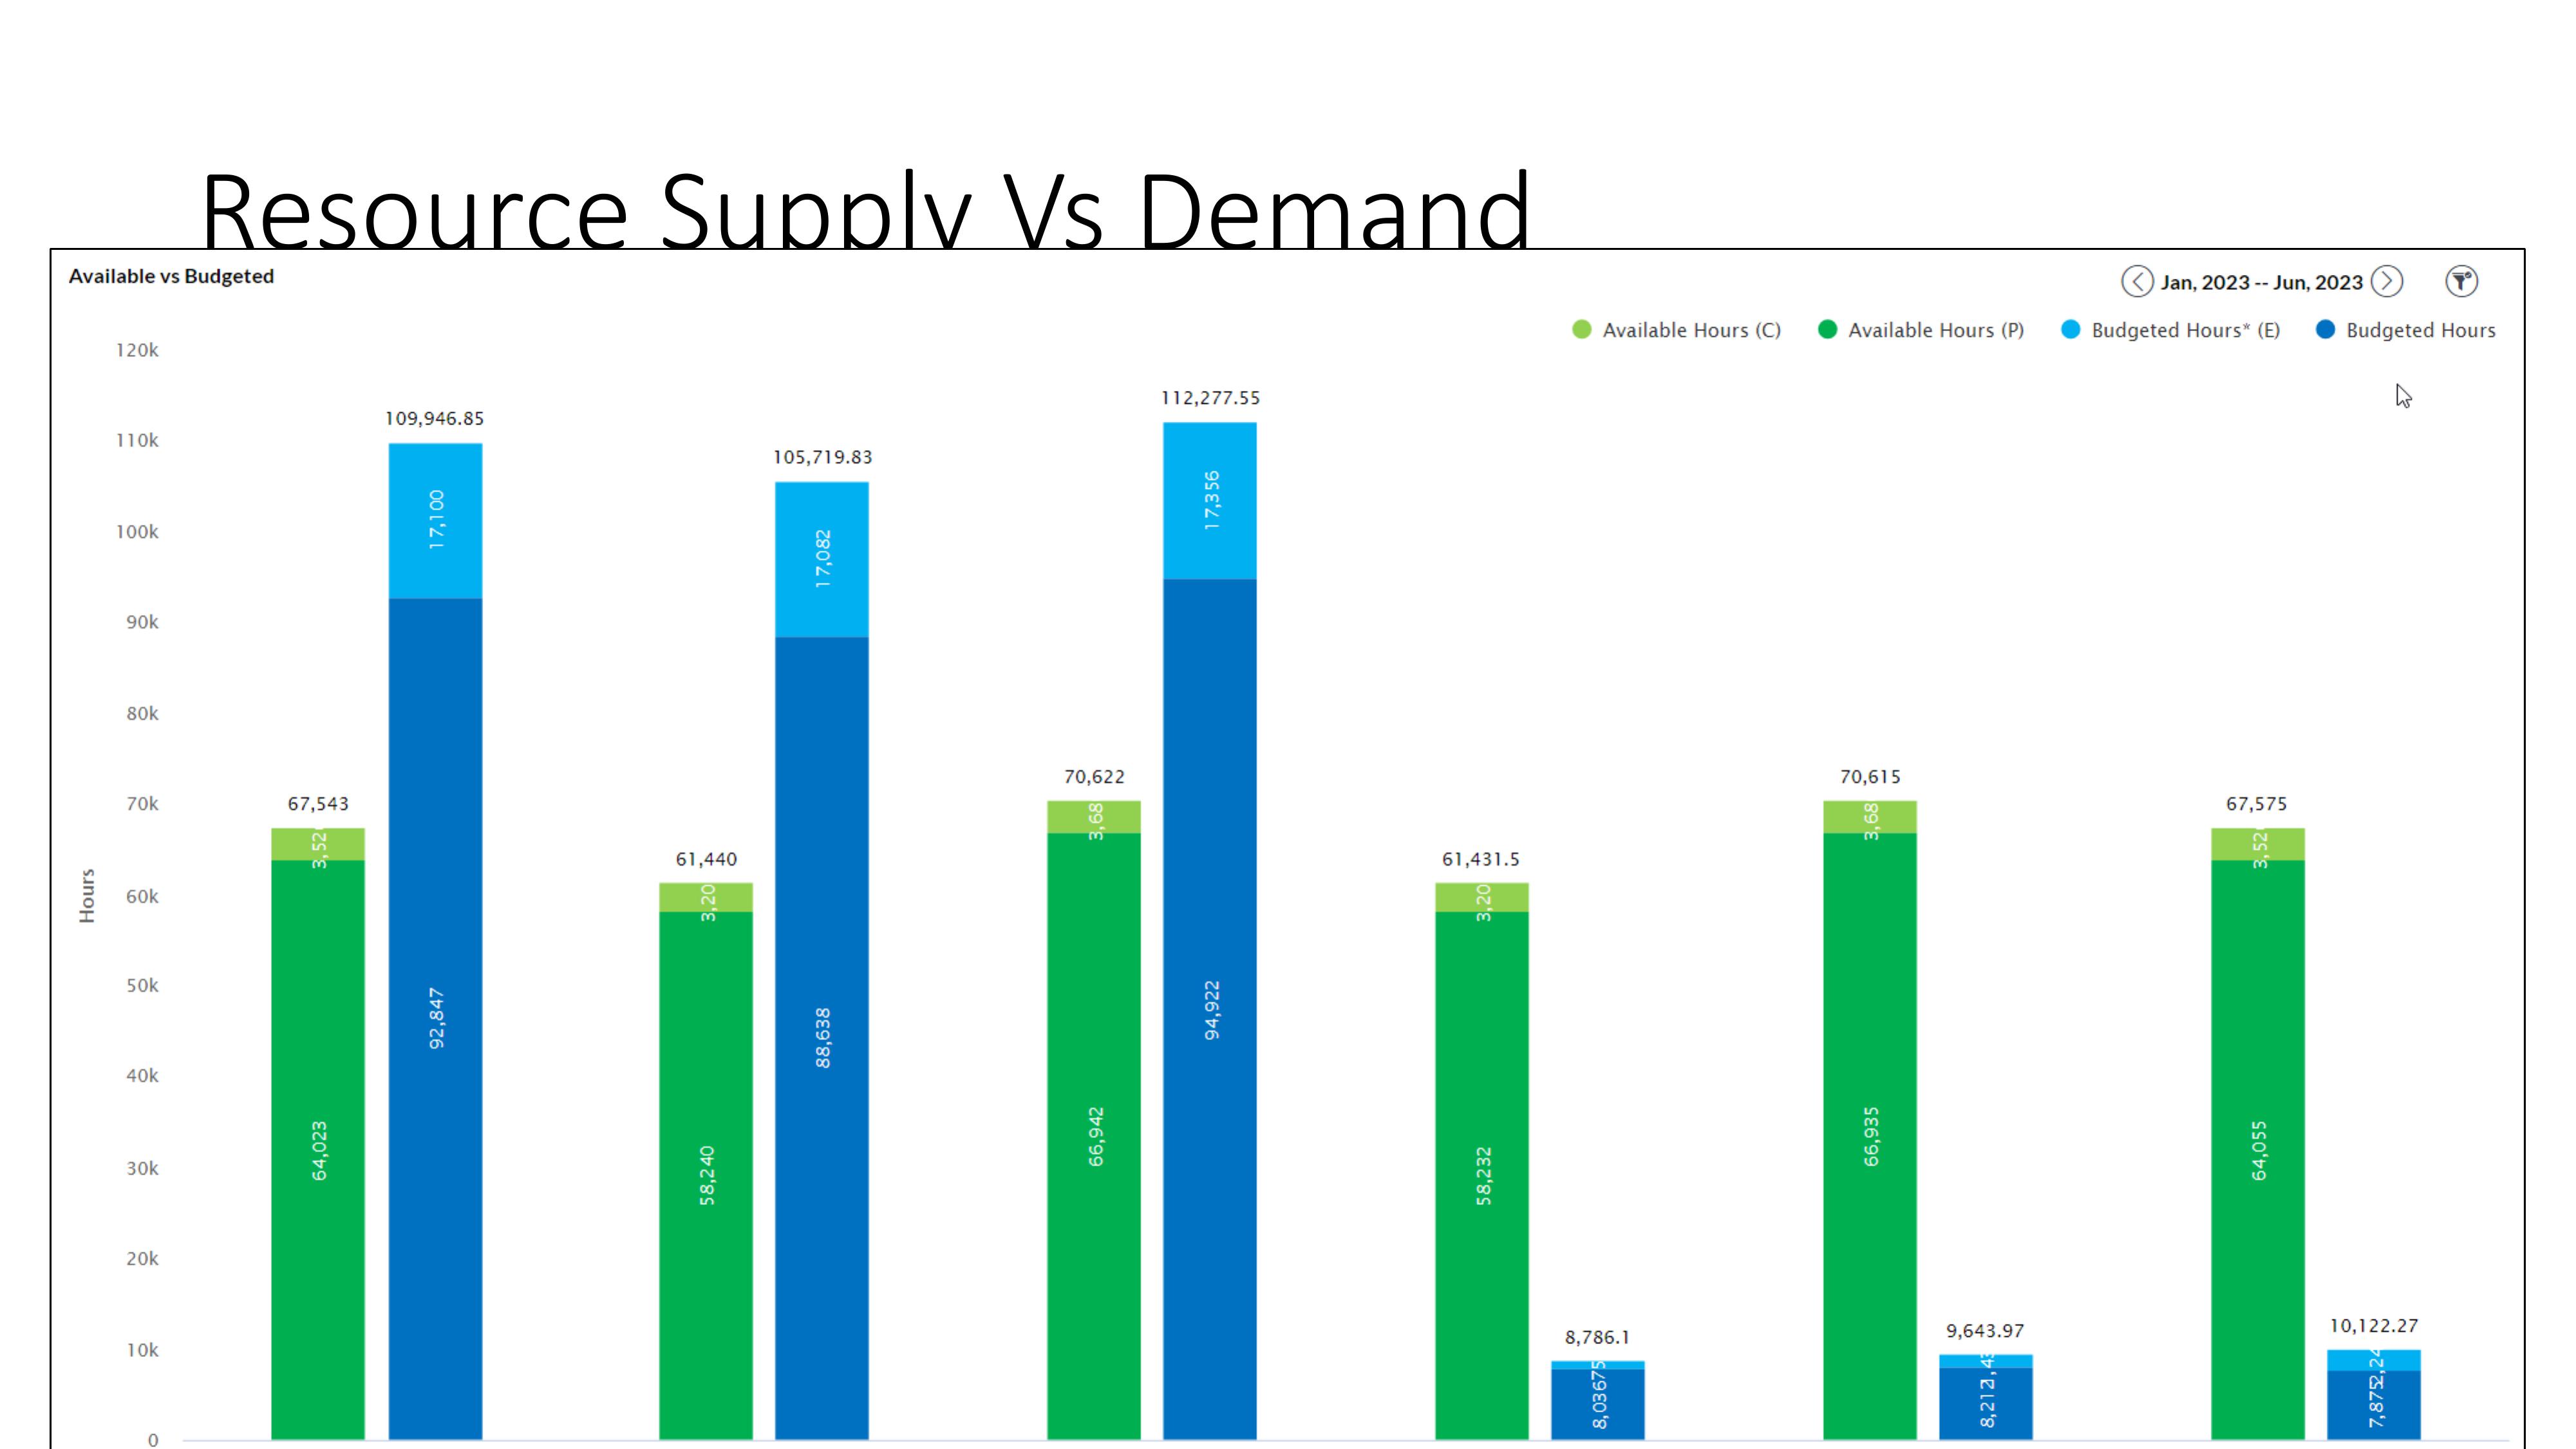 Resource Supply vs Demand